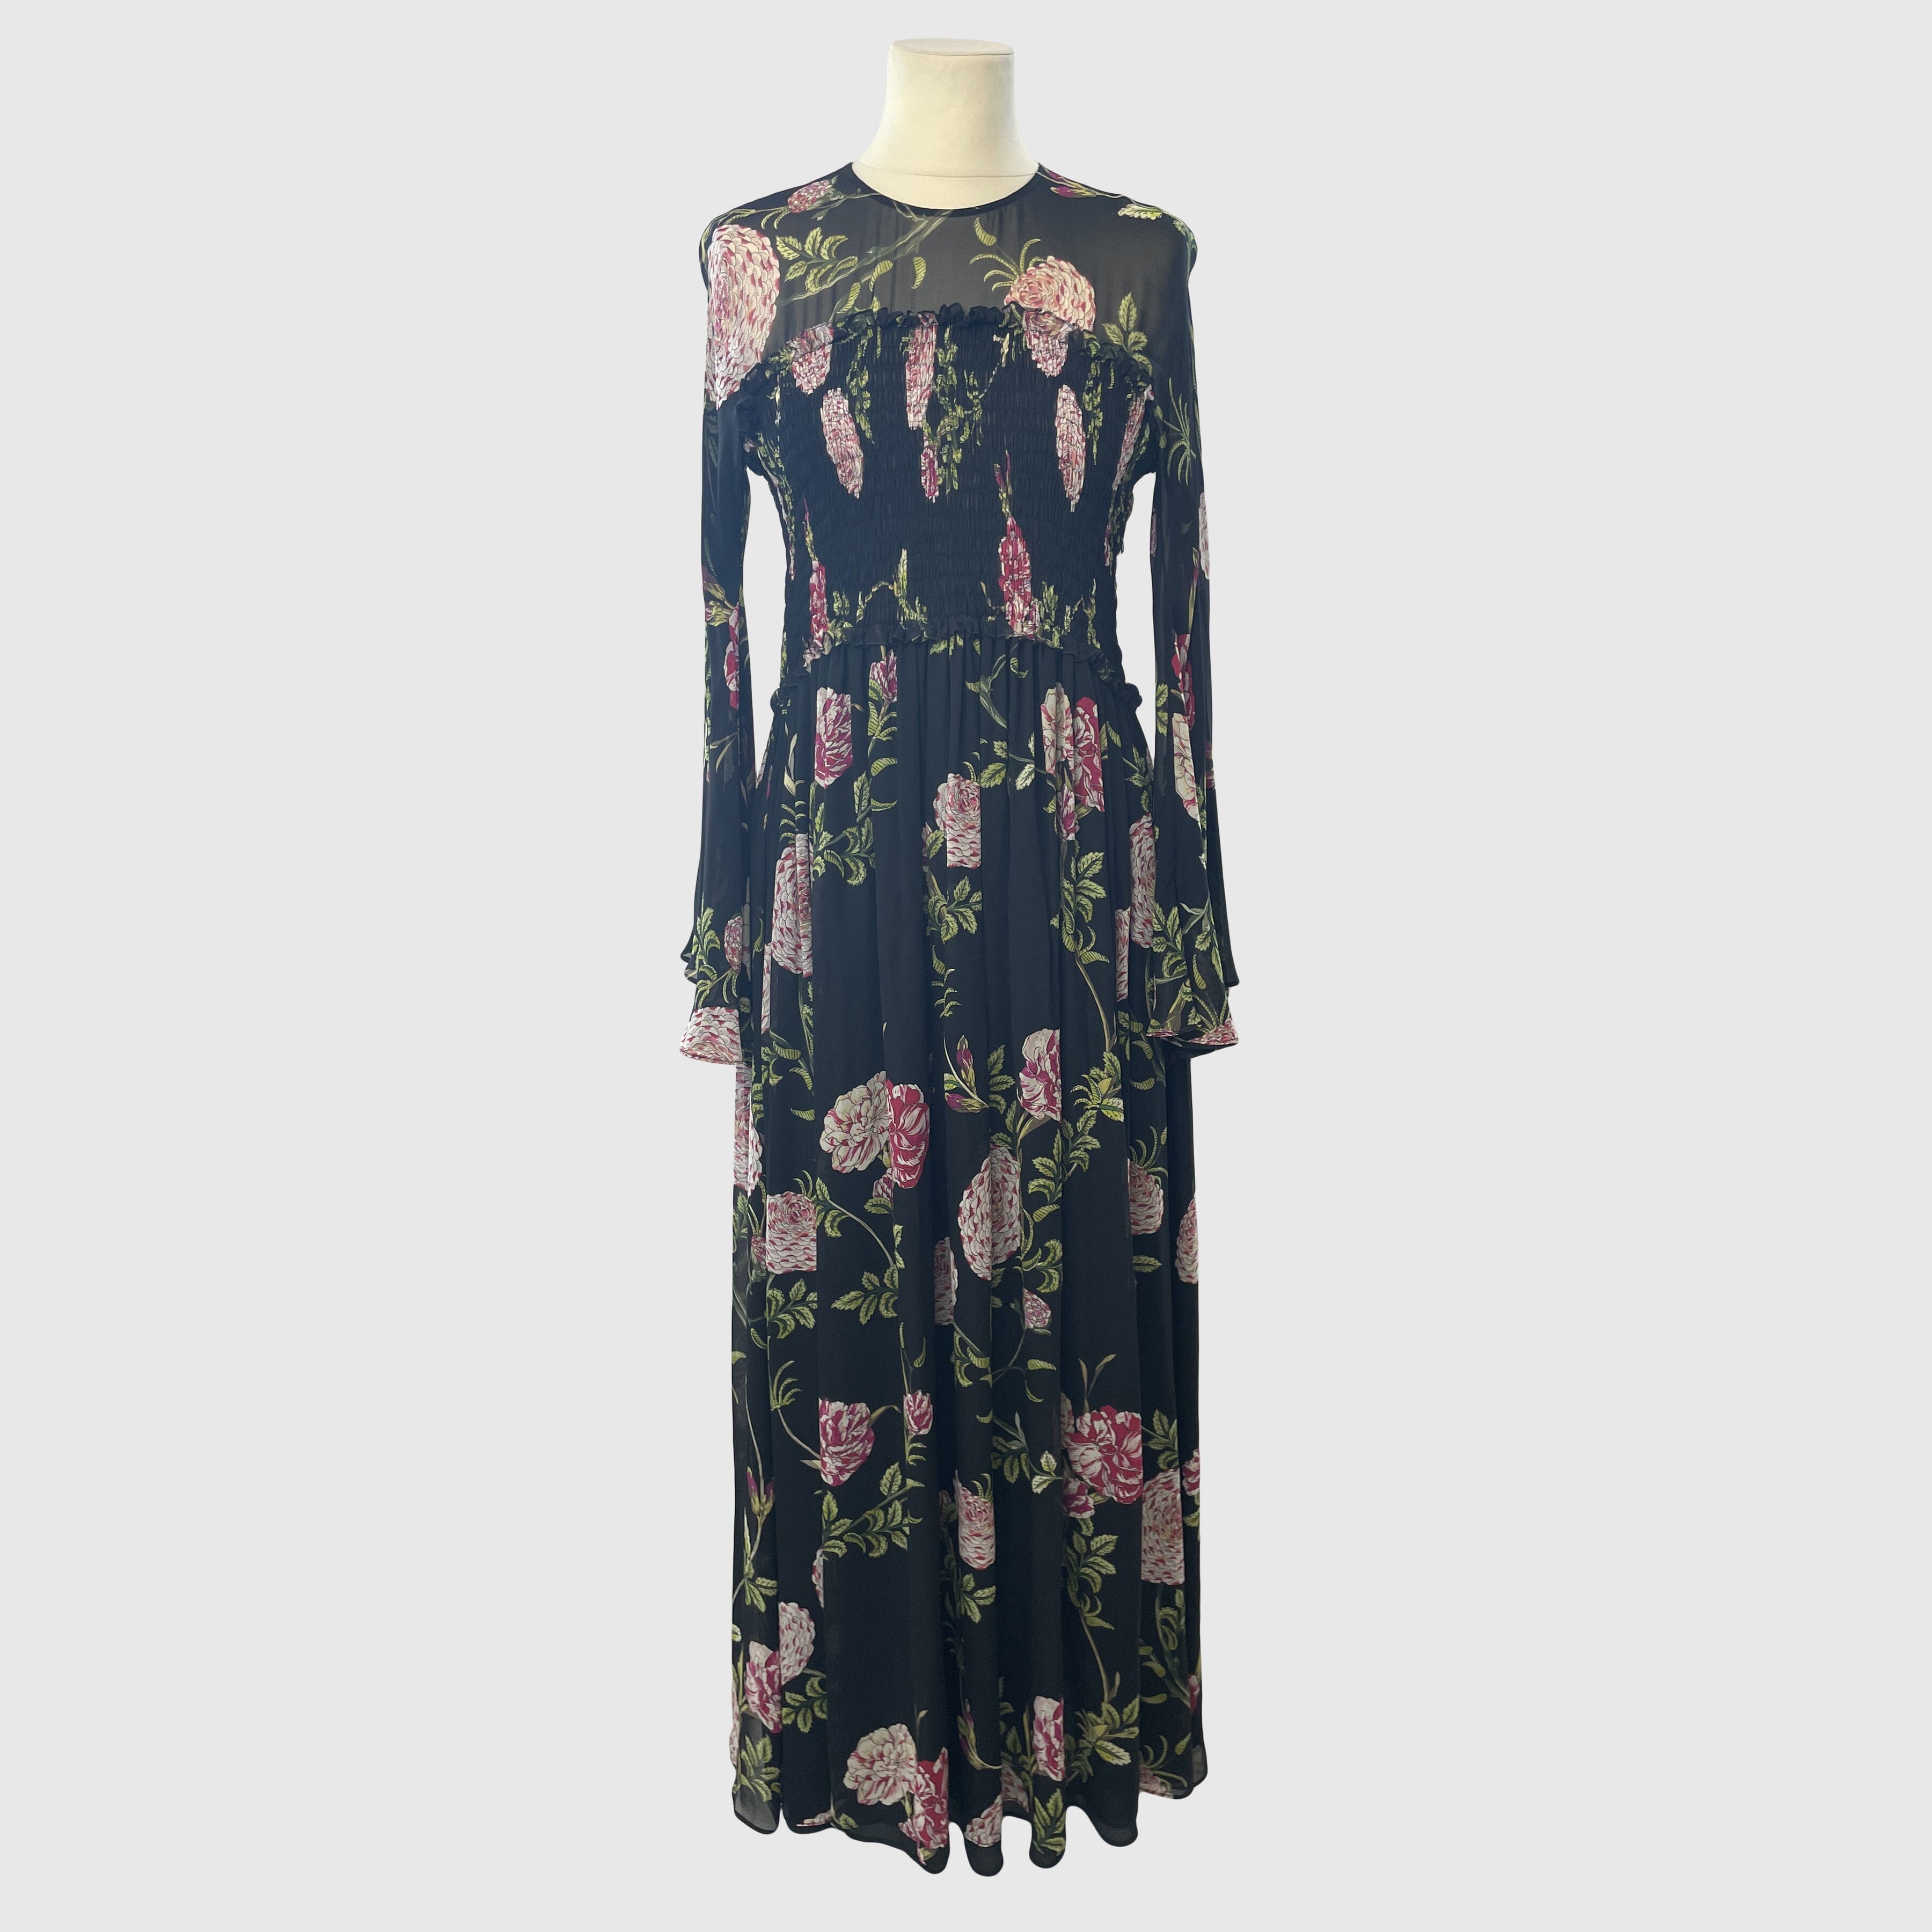 Black/Multicolor Floral Printed Maxi Dress